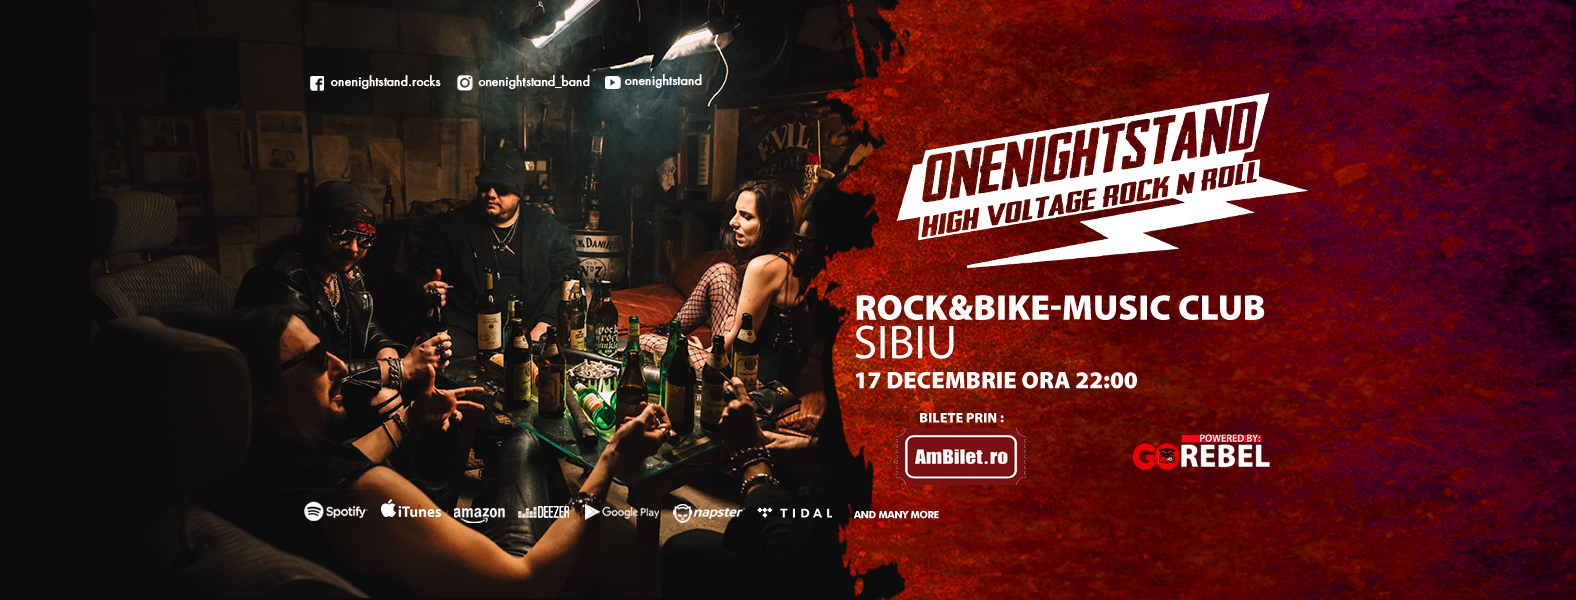 onenightstand live in Rock&Bike - Music Club, Sibiu